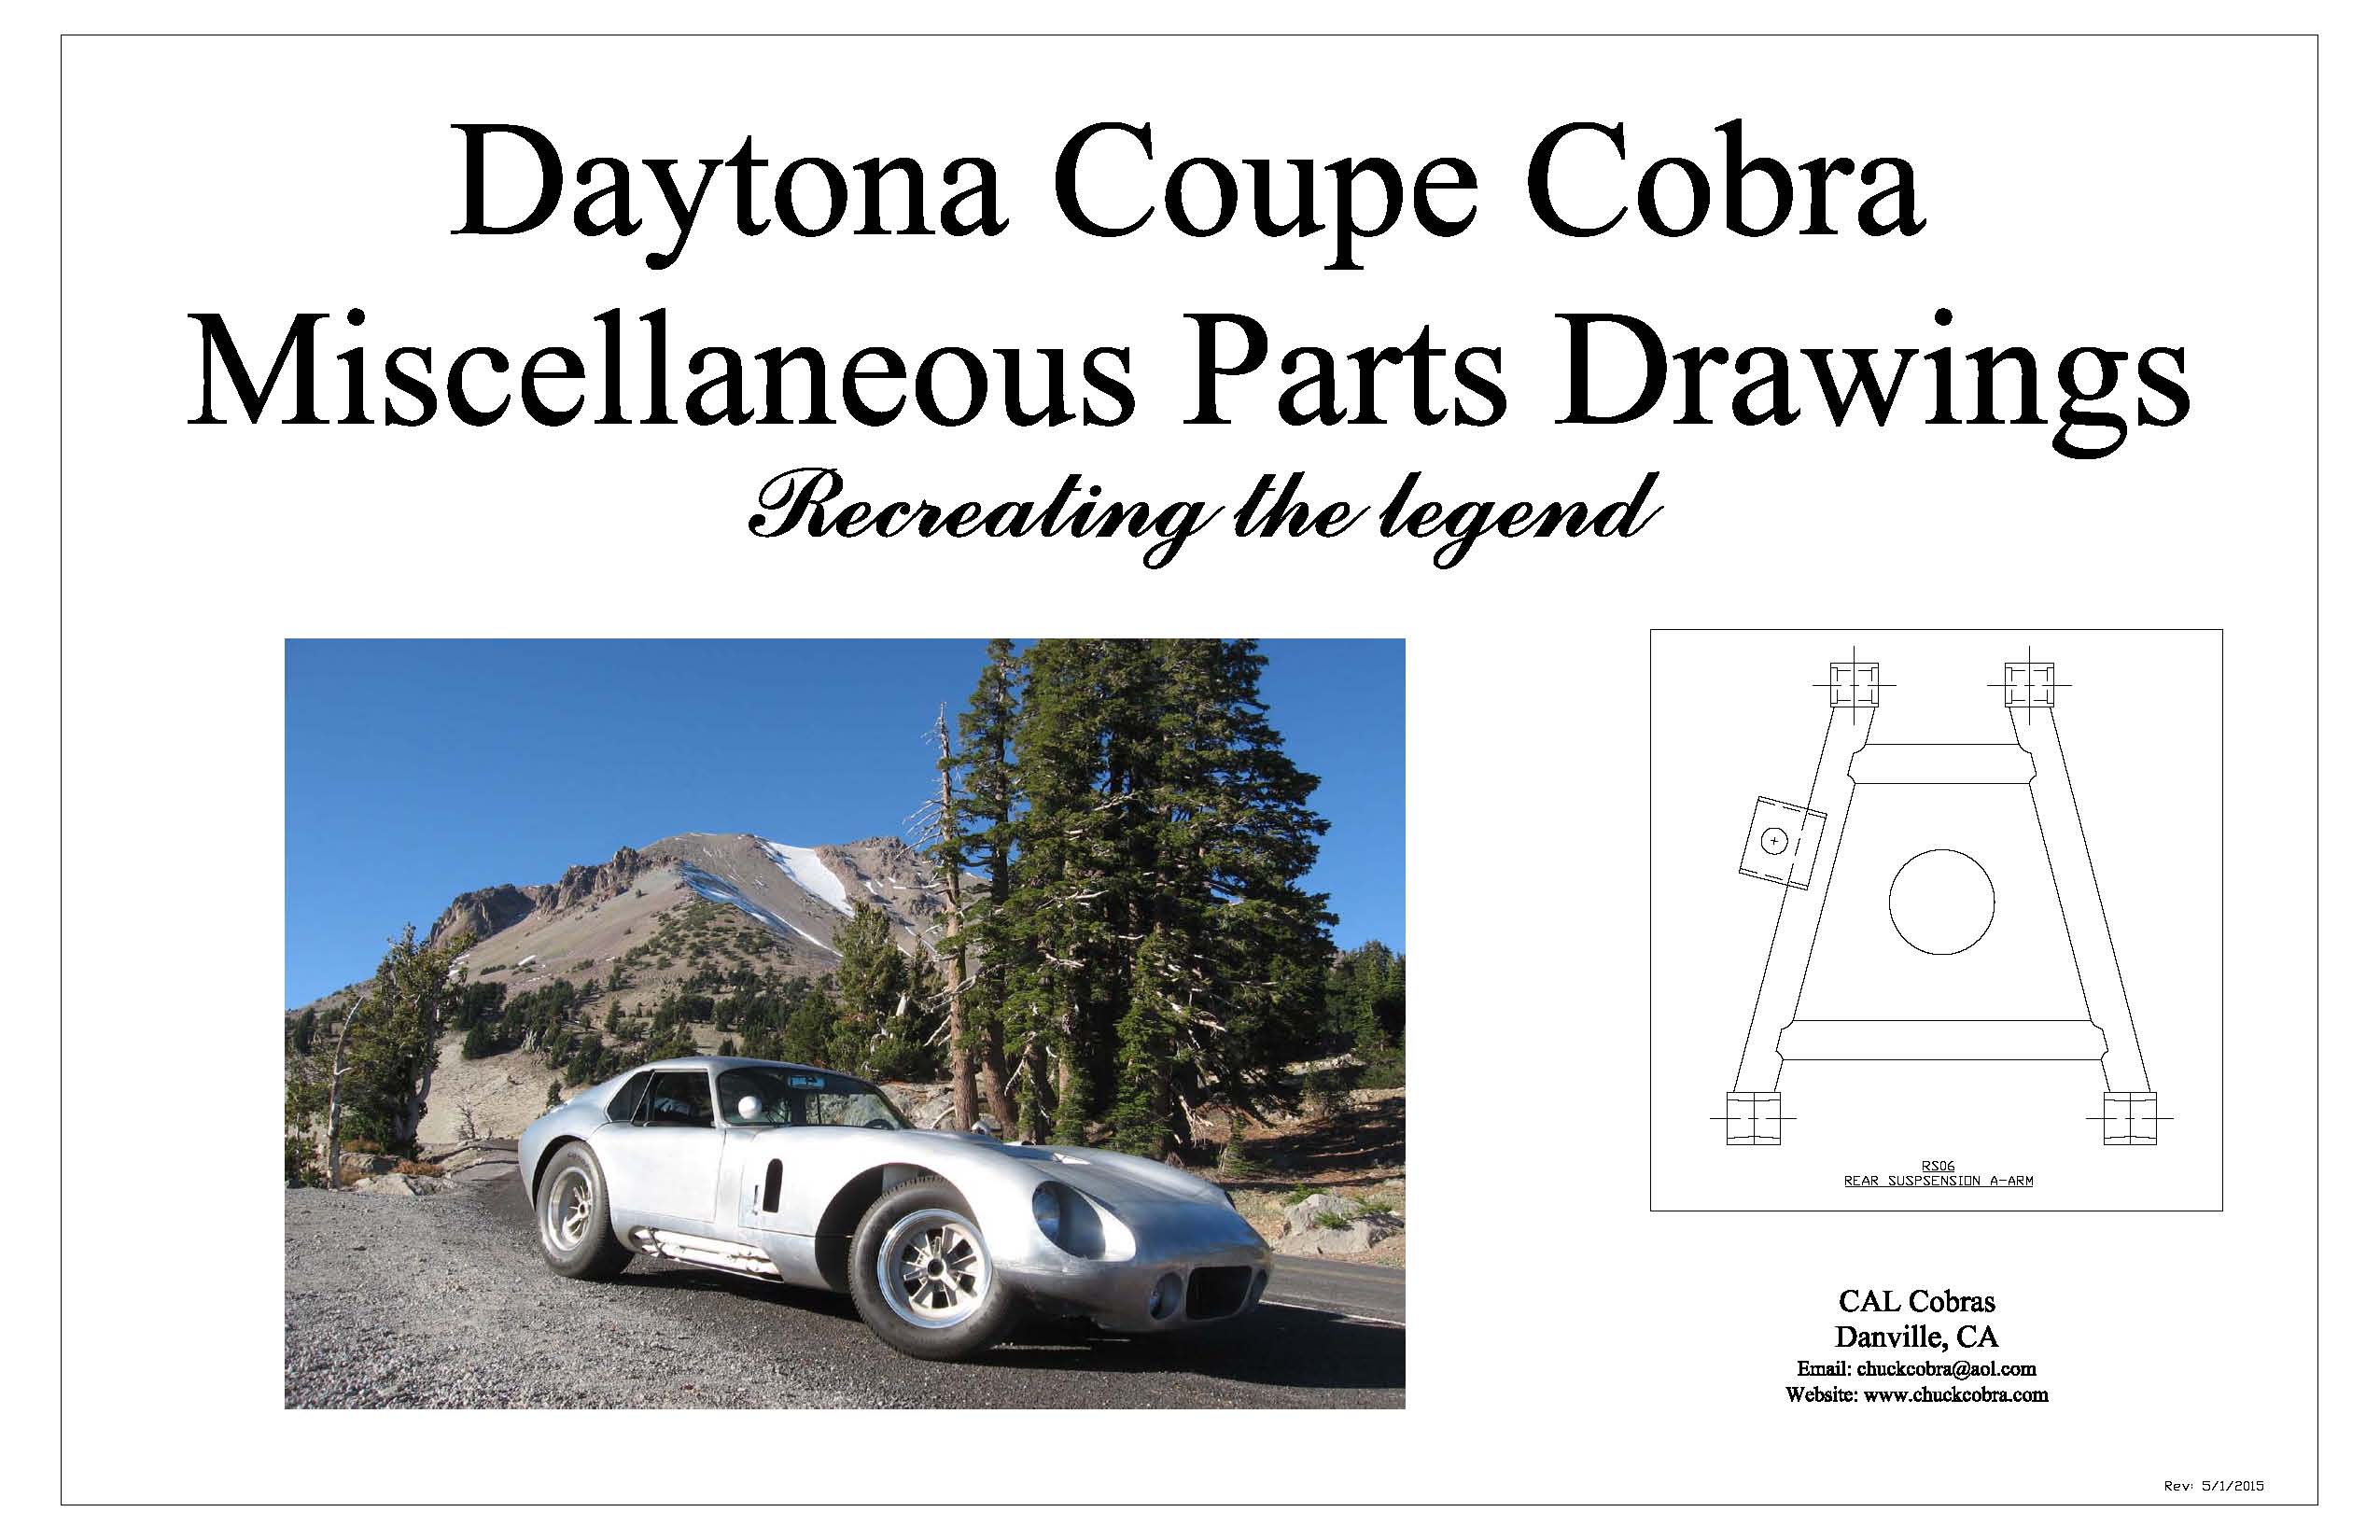 Daytona coupe cobra miscellaneous parts drawings